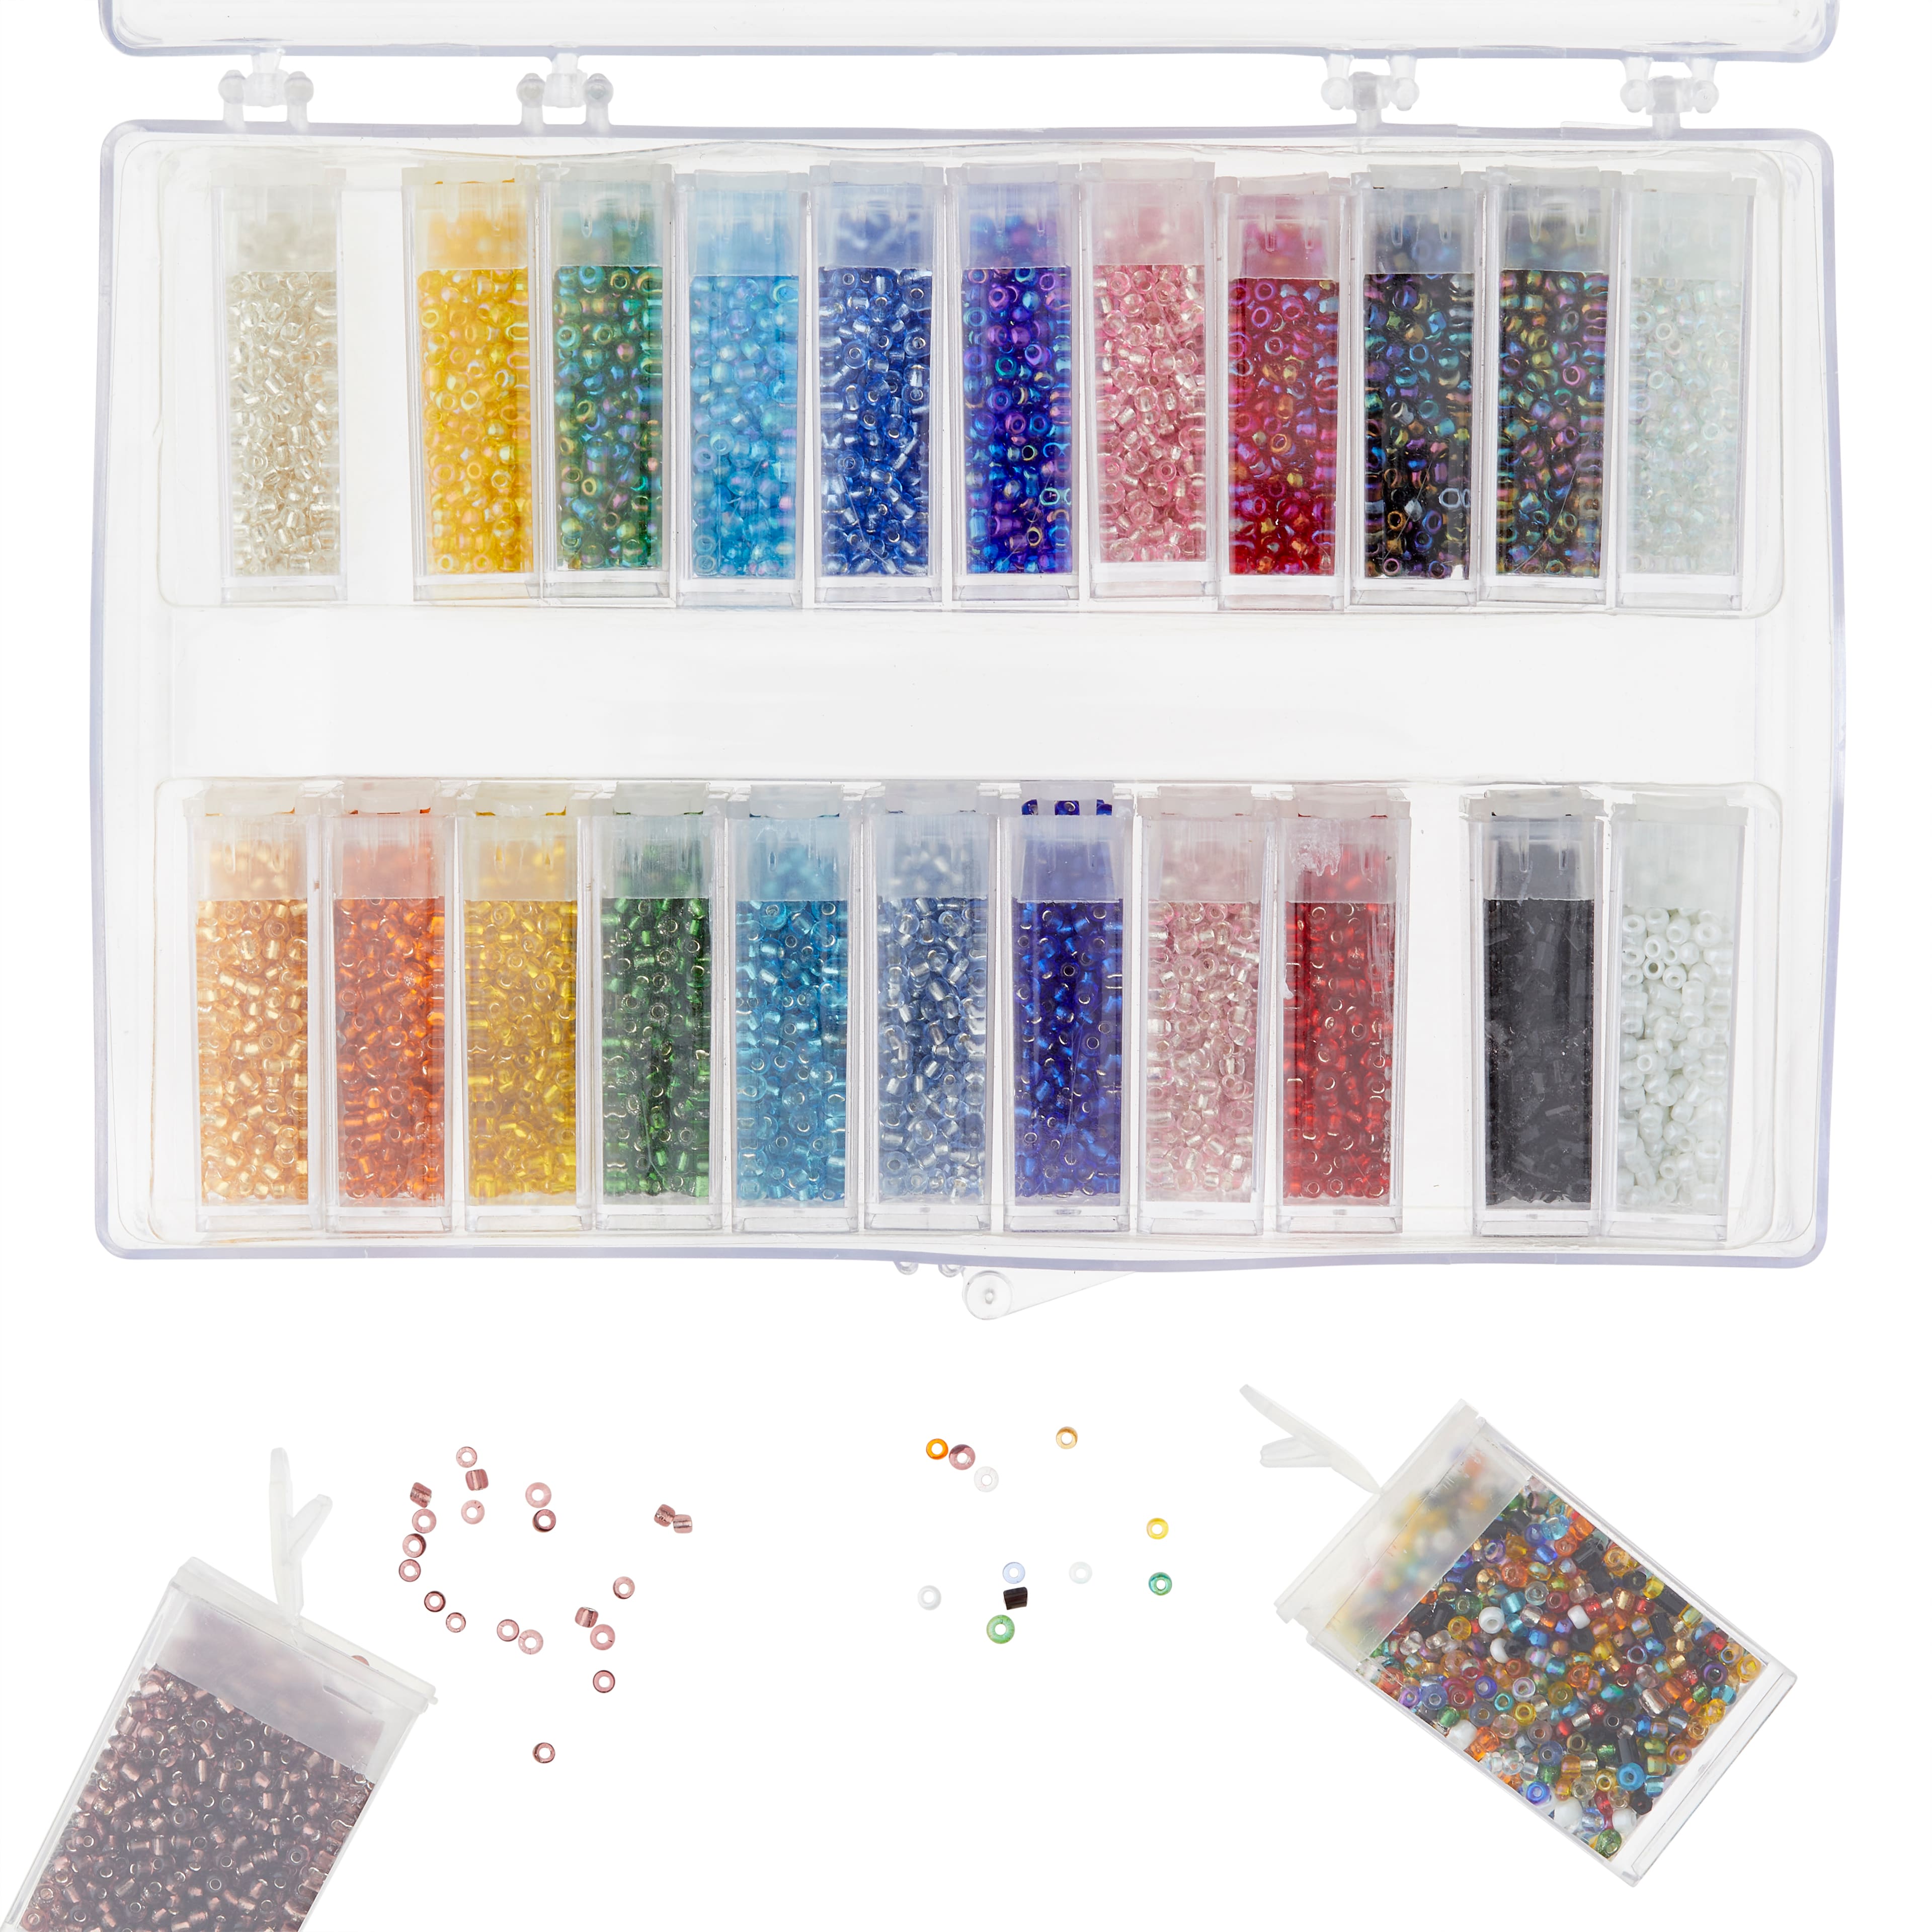 Kitcheniva 6800 Clay Beads Bracelet Making Kit 24 Colors